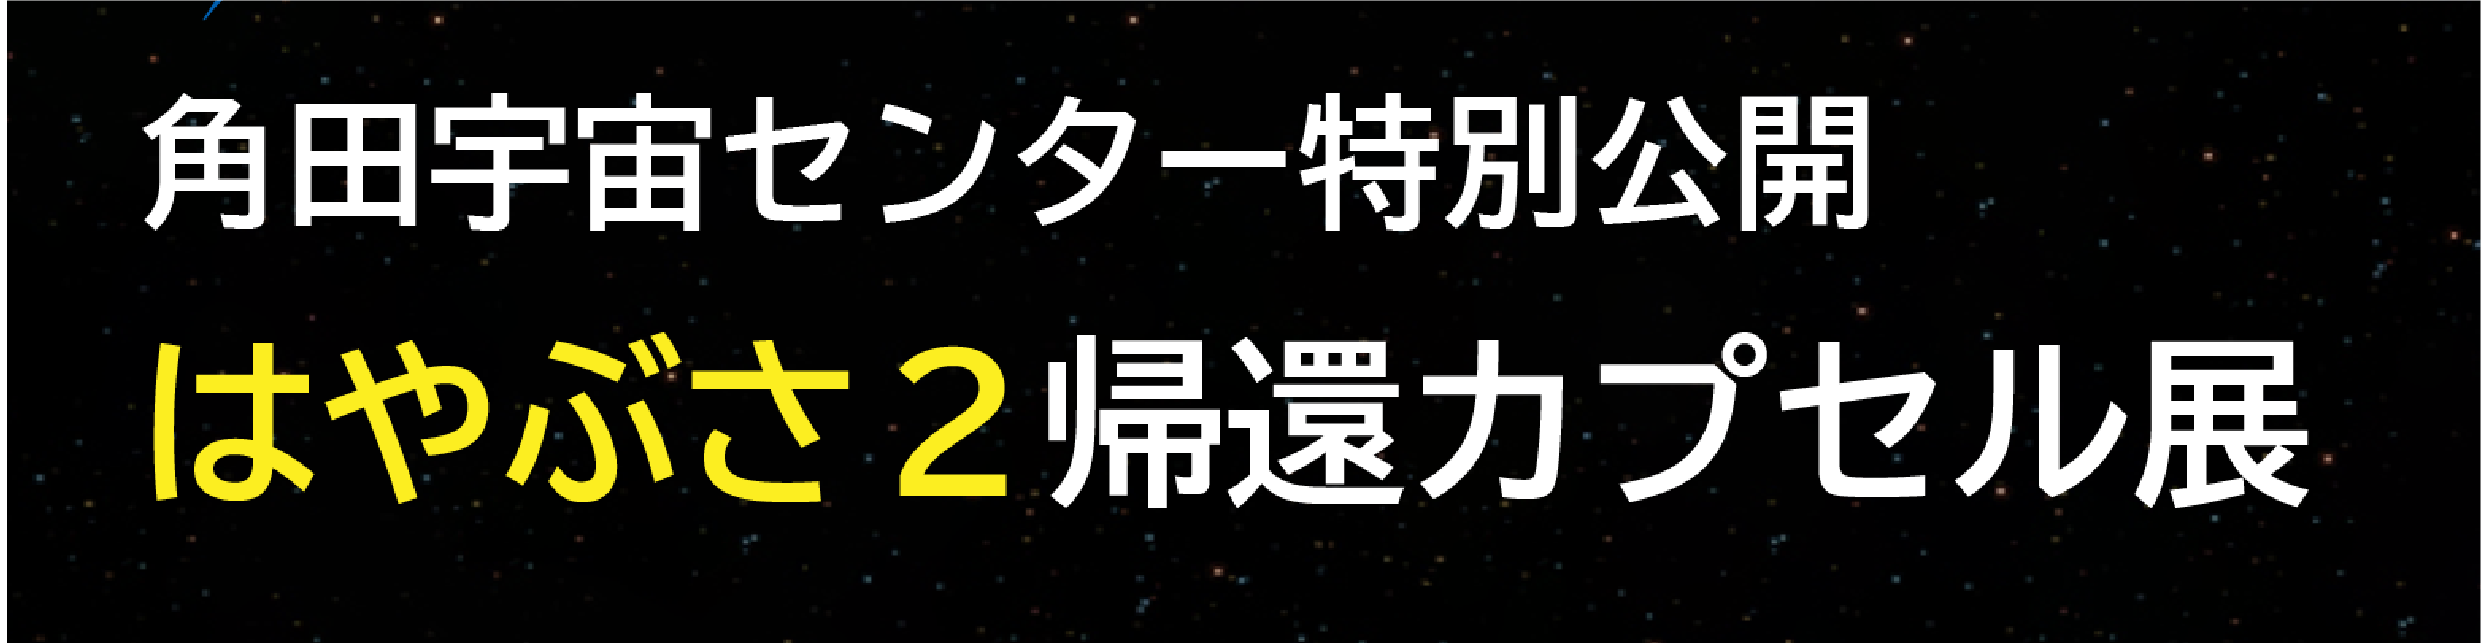 JAXA角田宇宙センター特別公開「はやぶさ2」帰還カプセル展